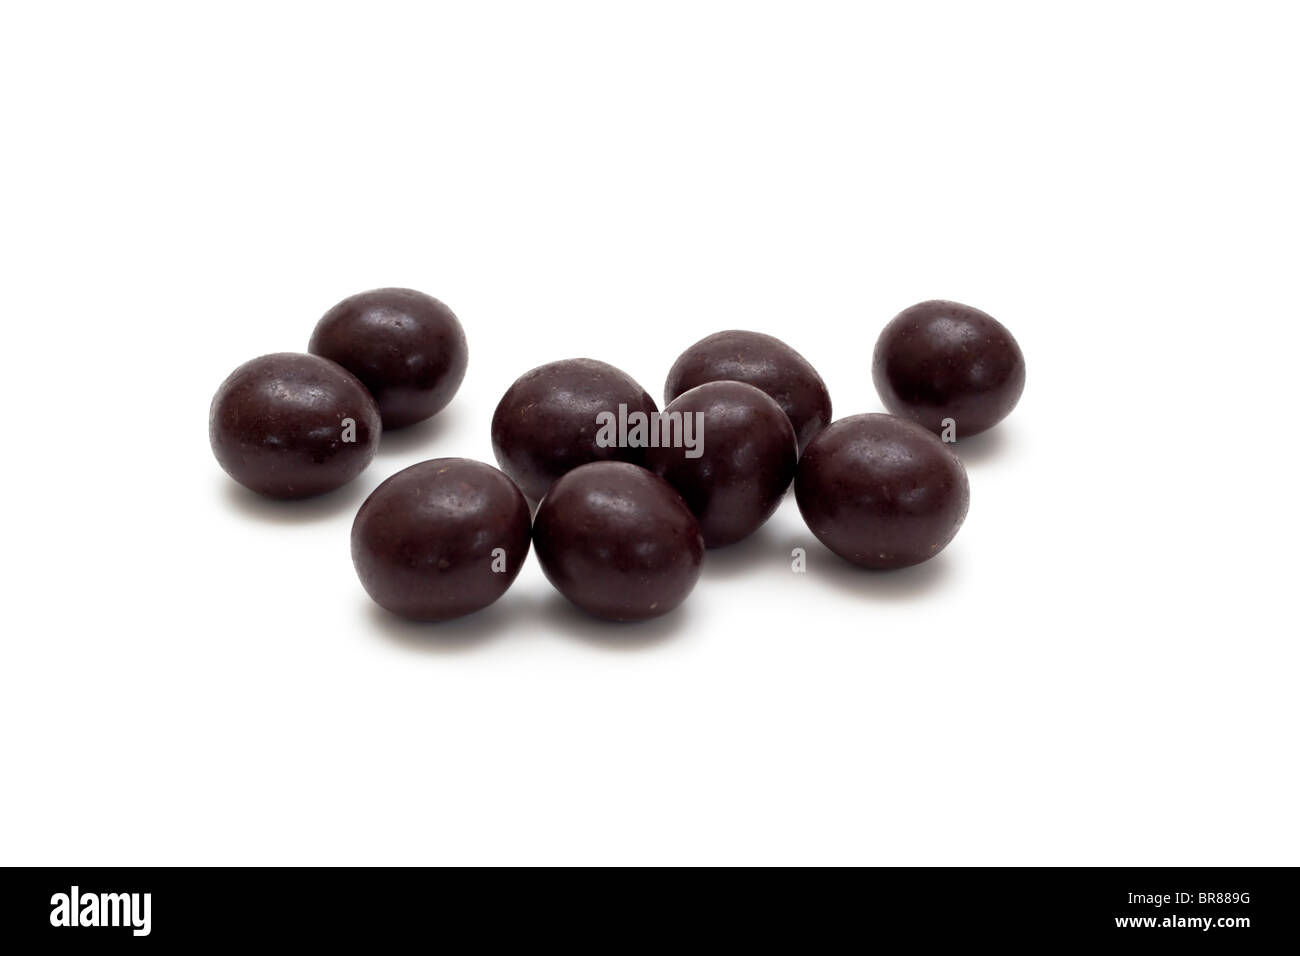 Chocolate covered macadamia nuts Stock Photo